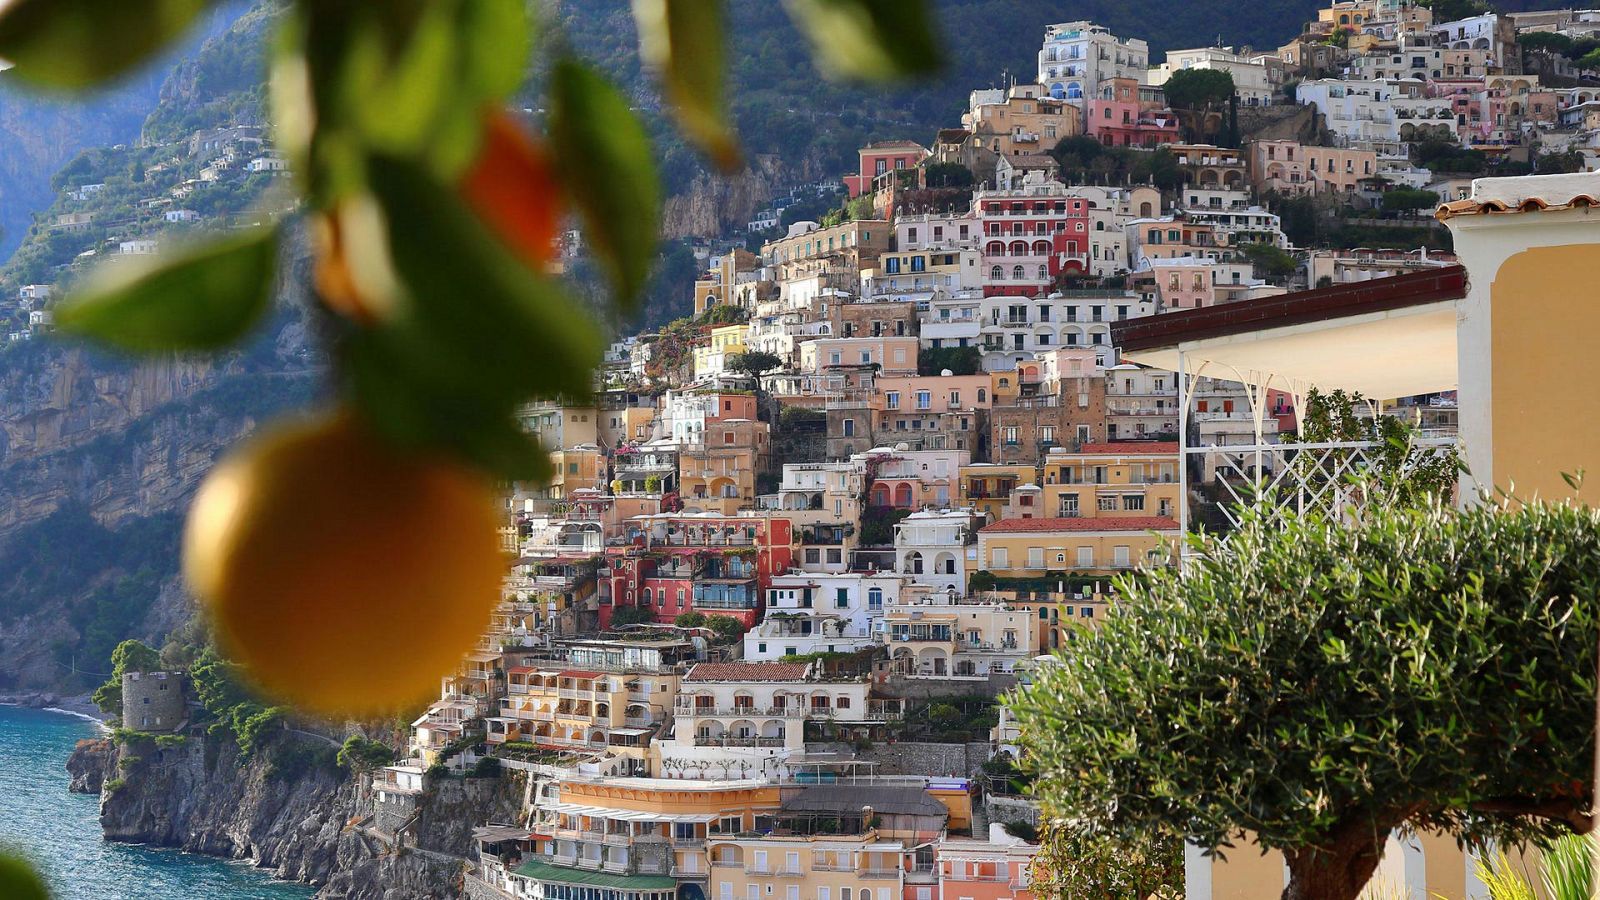 La escapada costera de Gino en Italia - Amalfi - Documental en RTVE